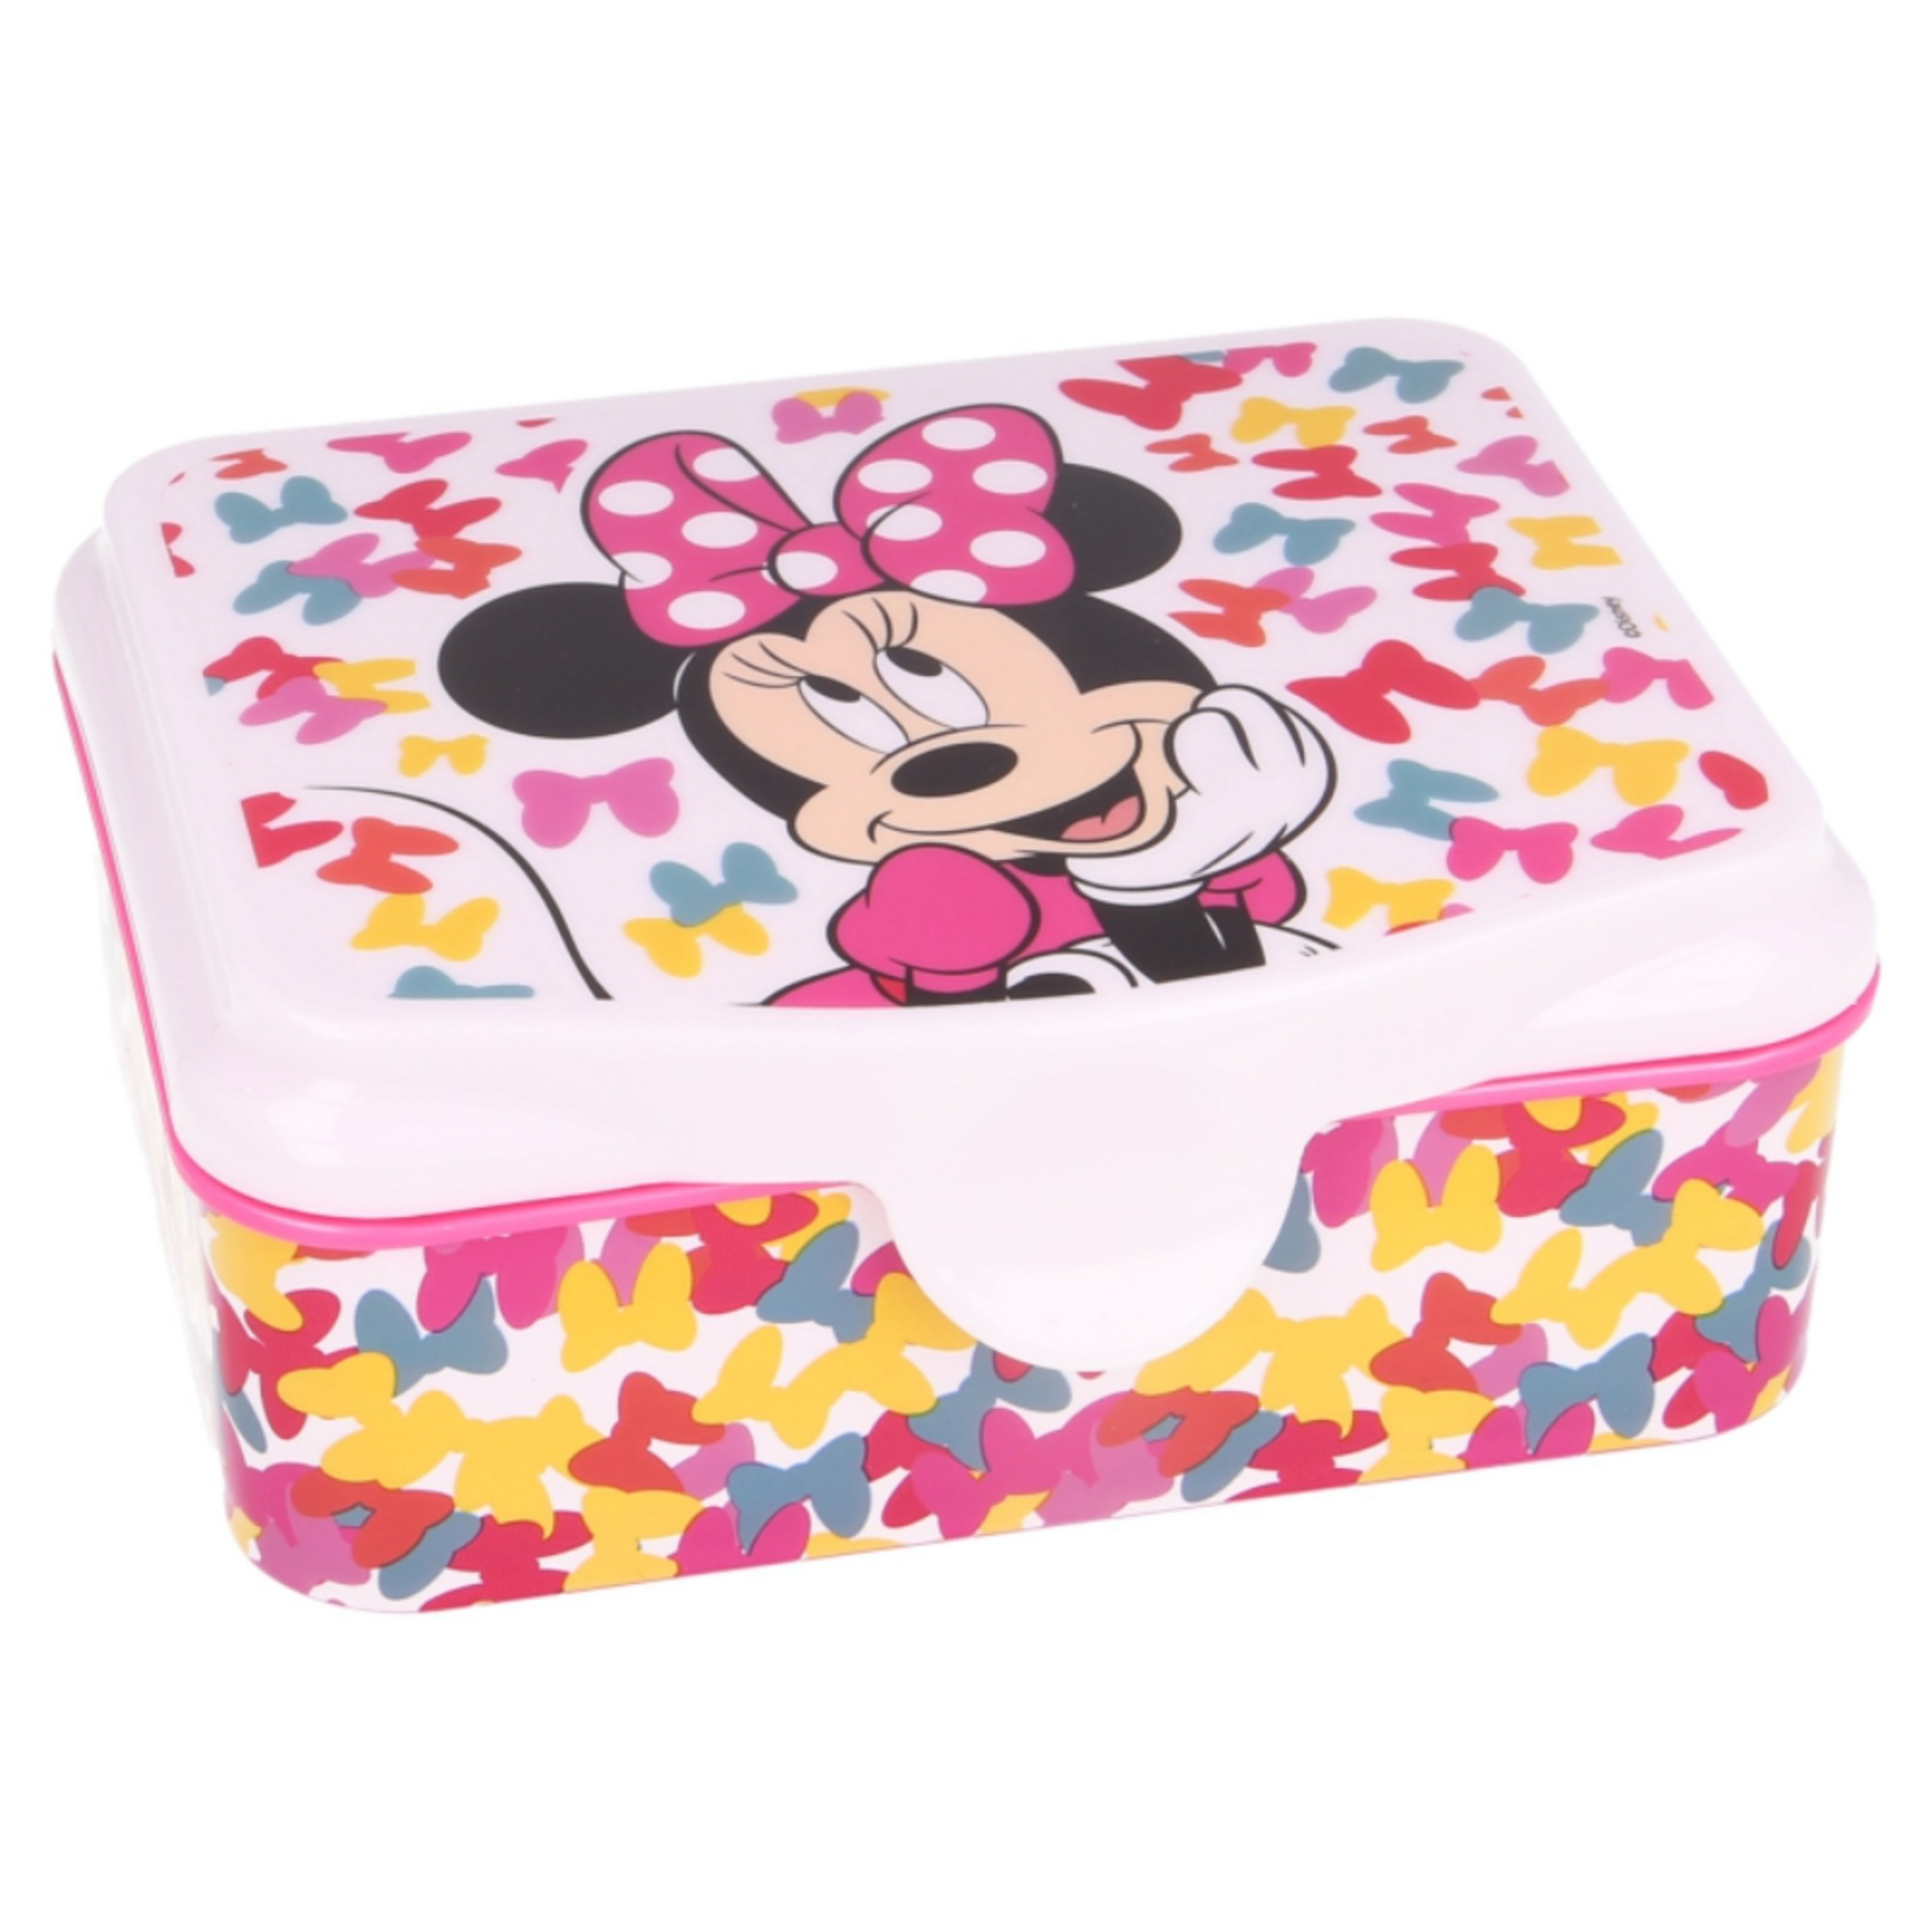 Sandwichera Minnie Mouse 65993 - rosa - 